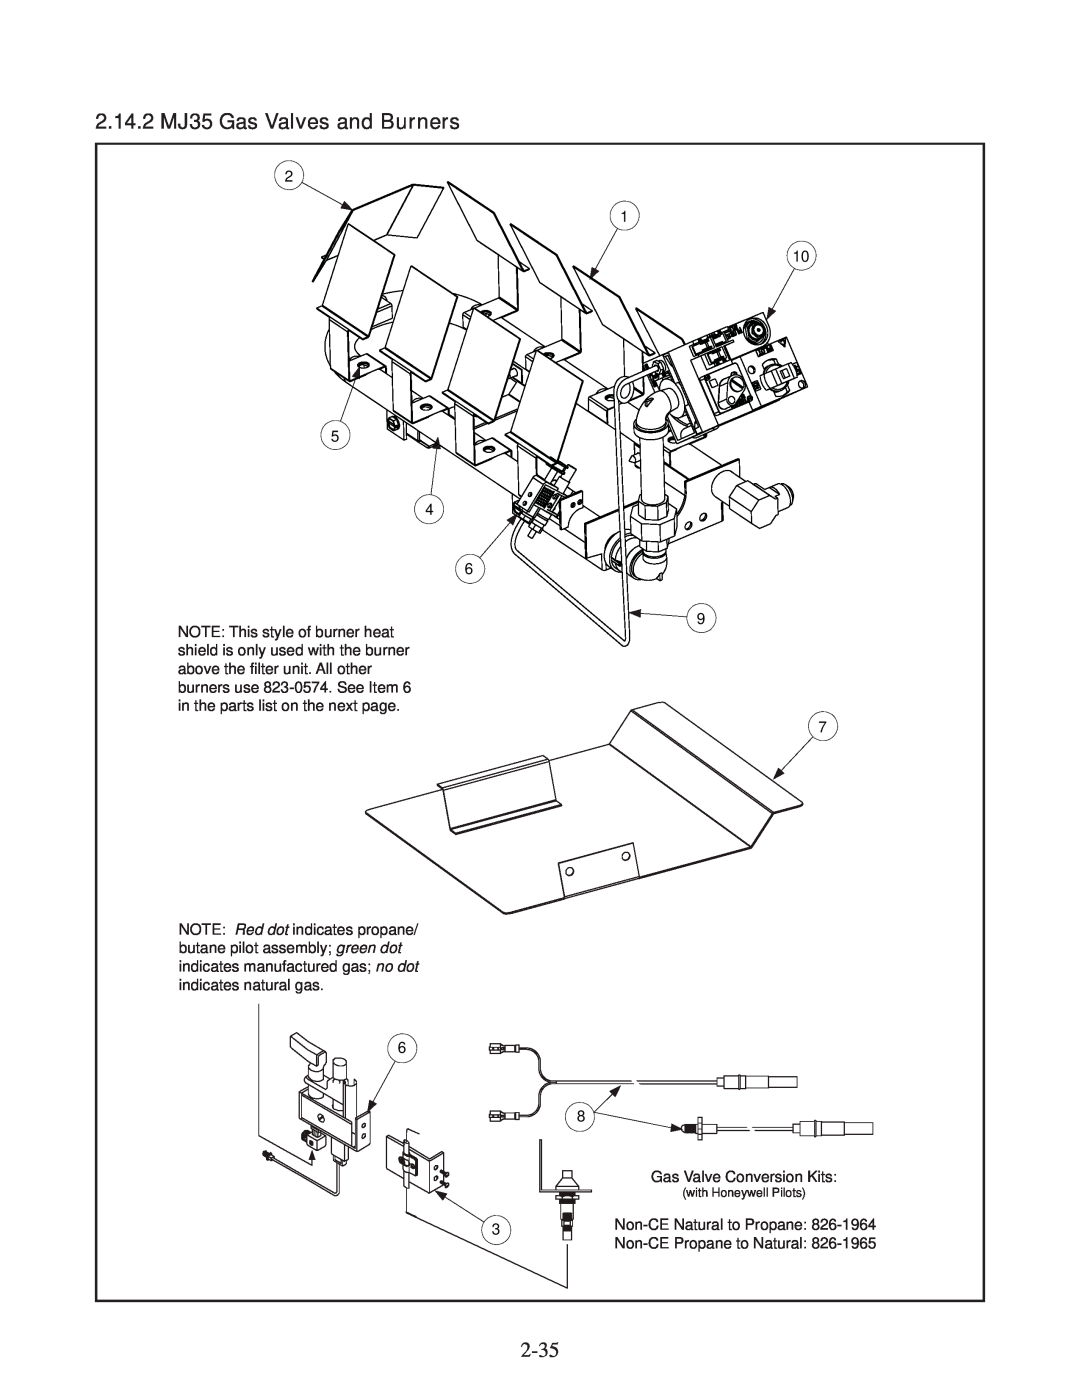 Frymaster 45 manual 2.14.2 MJ35 Gas Valves and Burners, Gas Valve Conversion Kits 